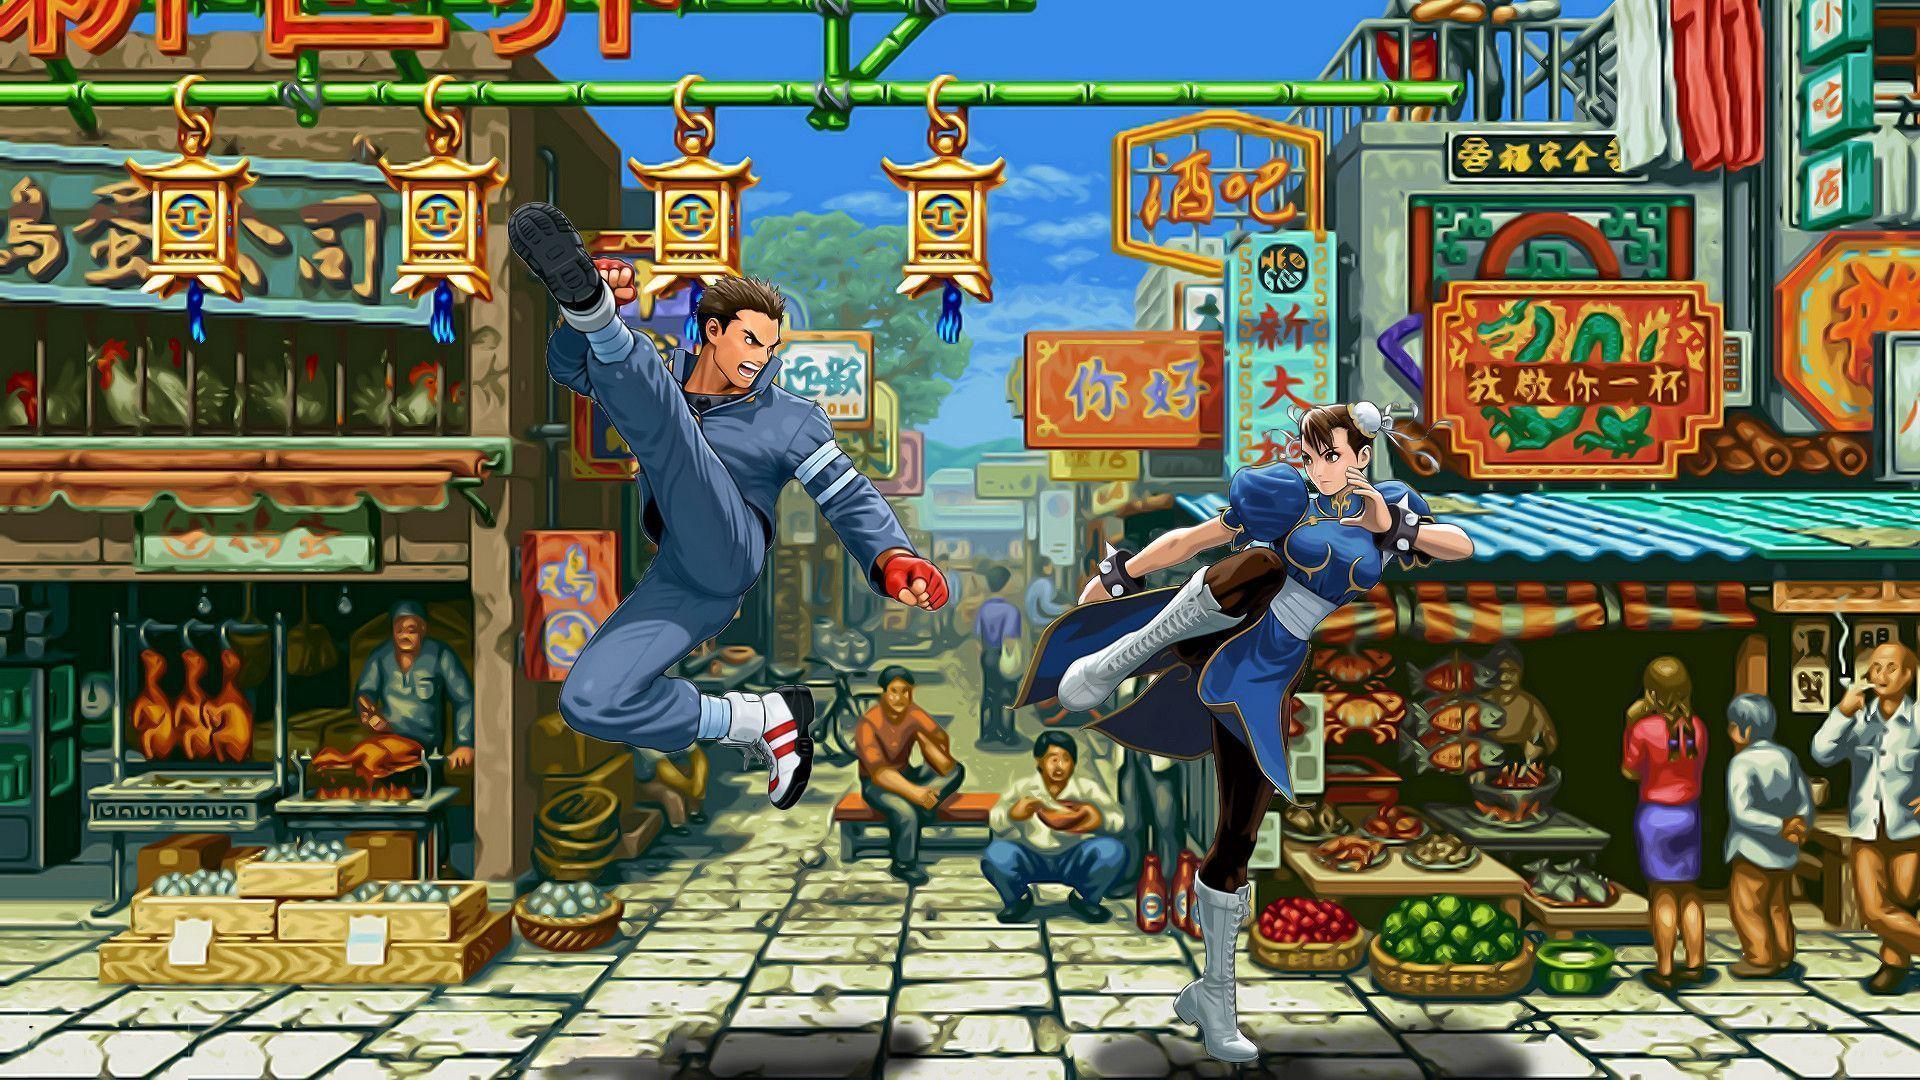 Street Fighter Computer Wallpaper, Desktop Background 1920x1080